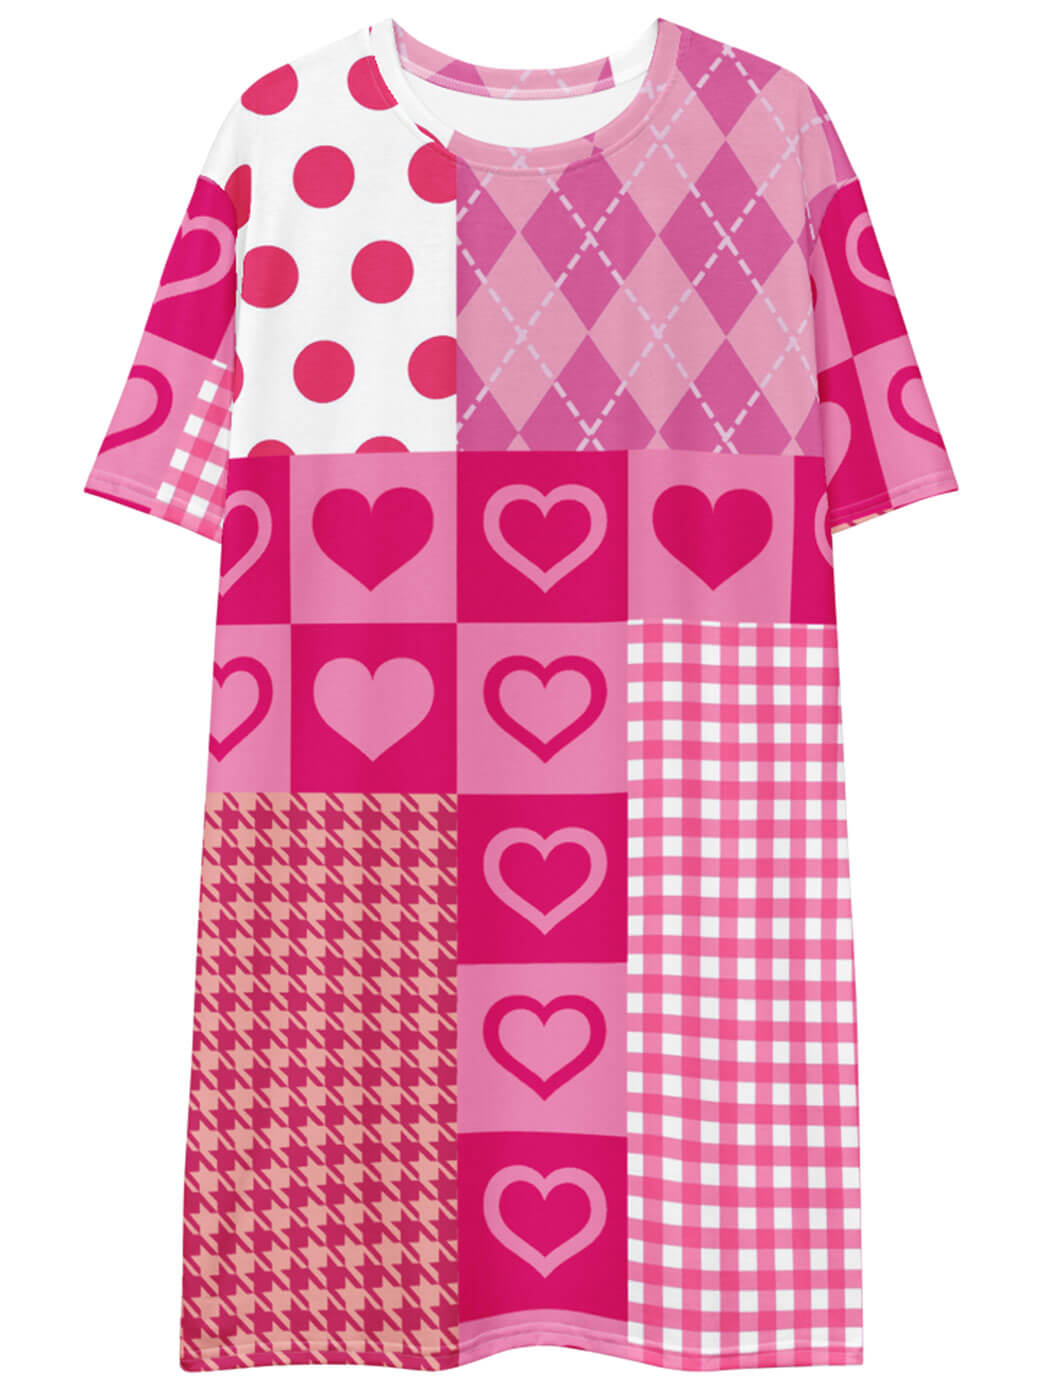 Kawaii pink patchwork dress.